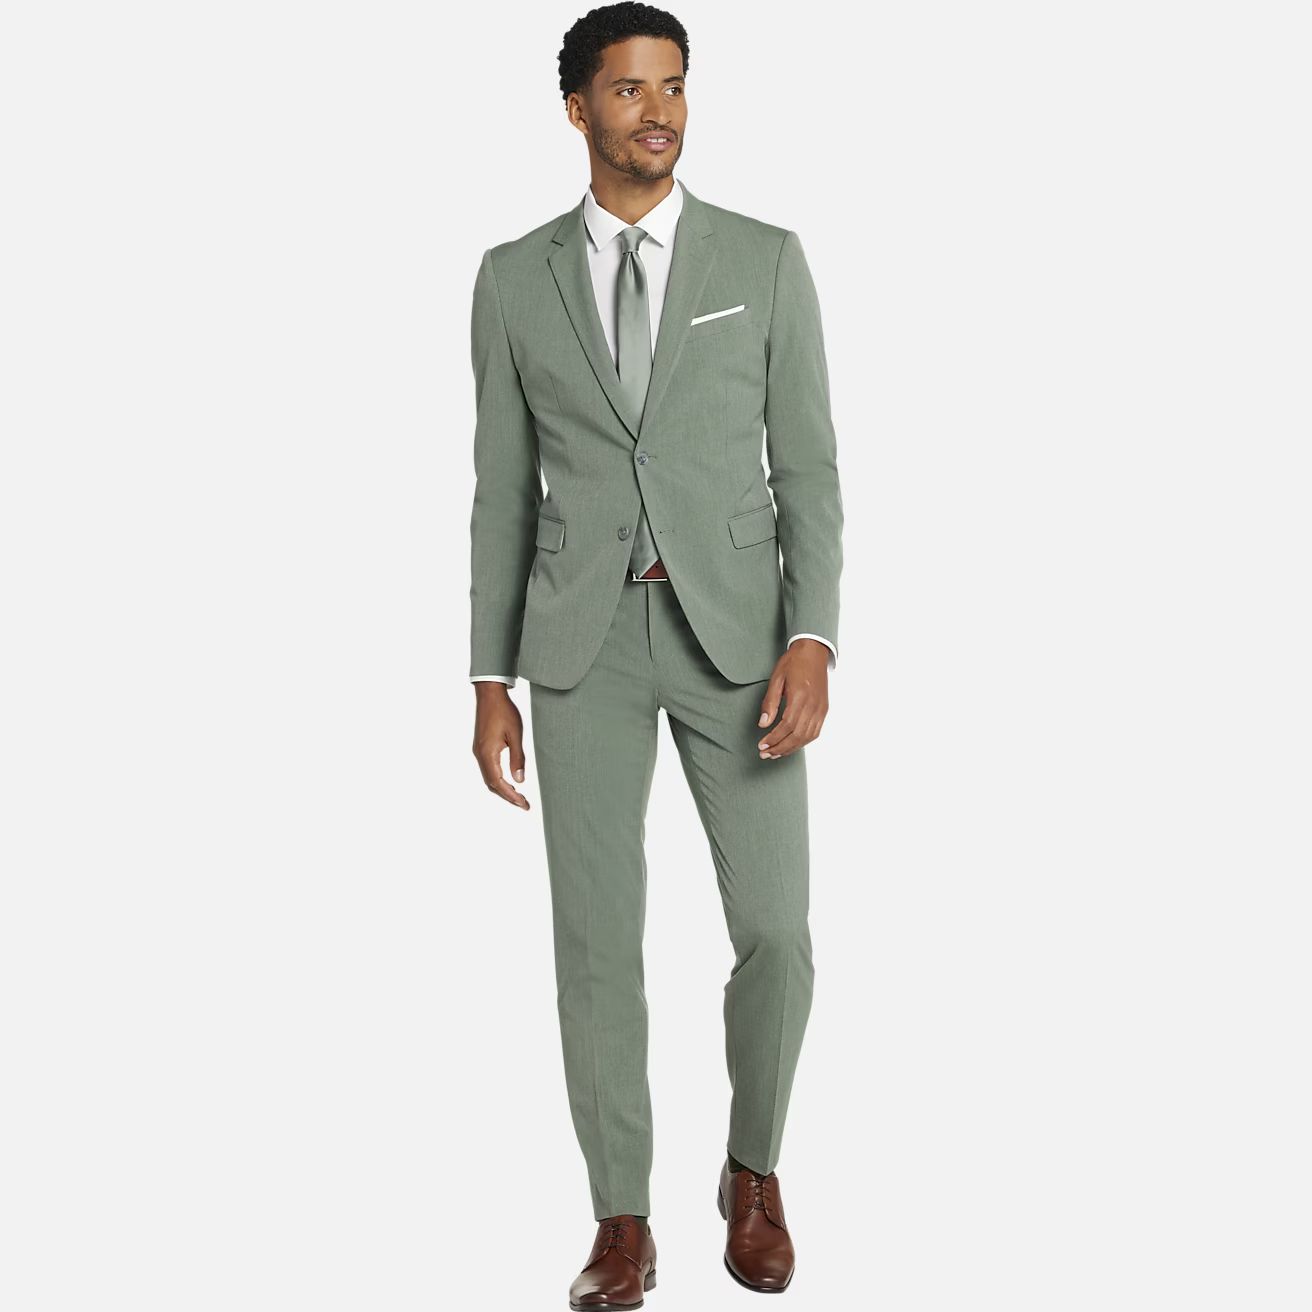 Egara Skinny Fit Suit Separates Jacket | All Sale| Men's Wearhouse | The Men's Wearhouse